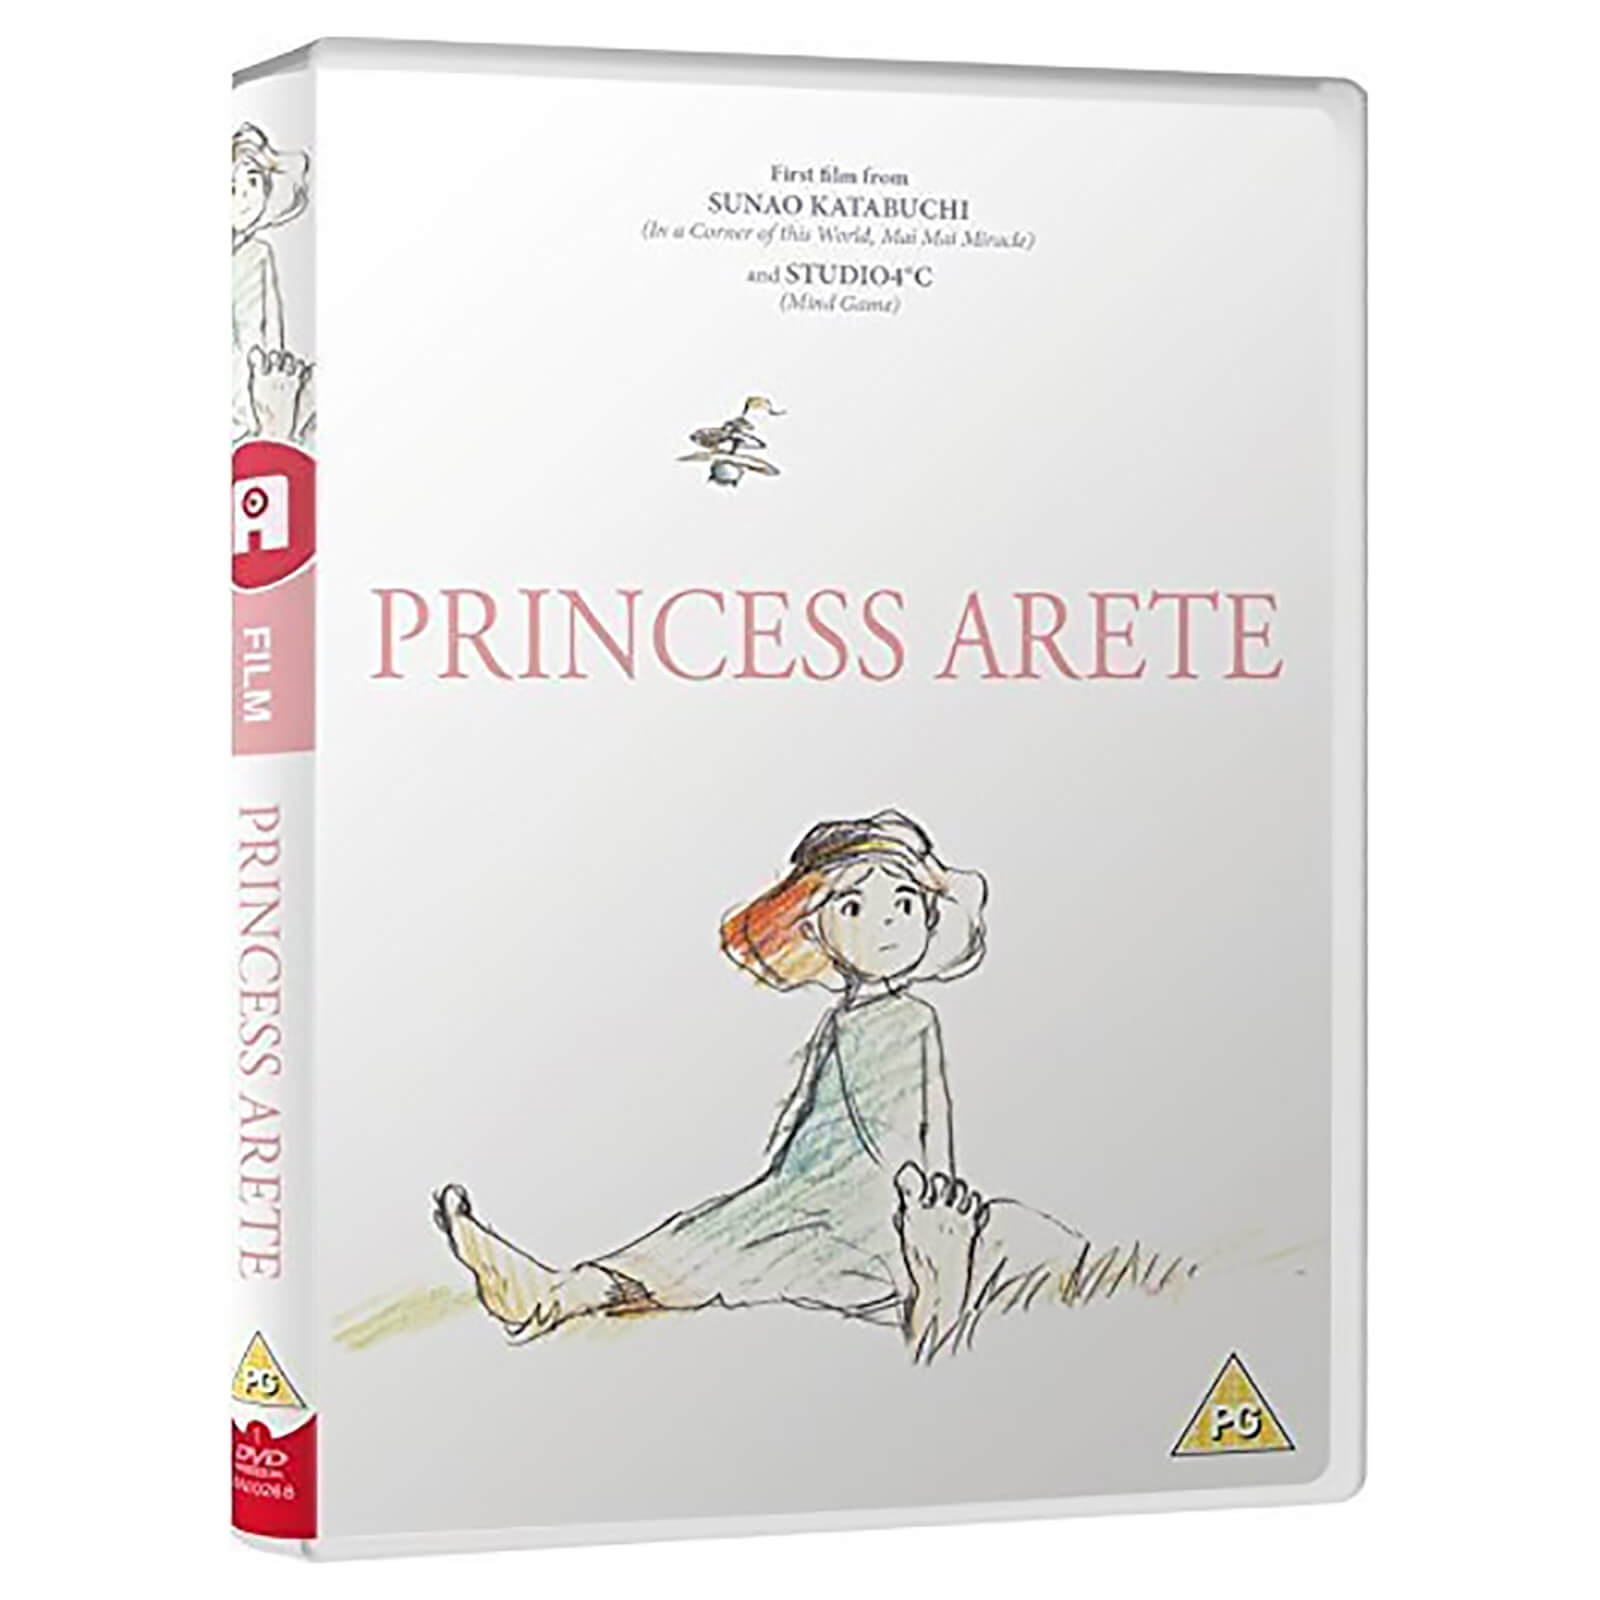 Prinzessin Arete - Standard von All The Anime